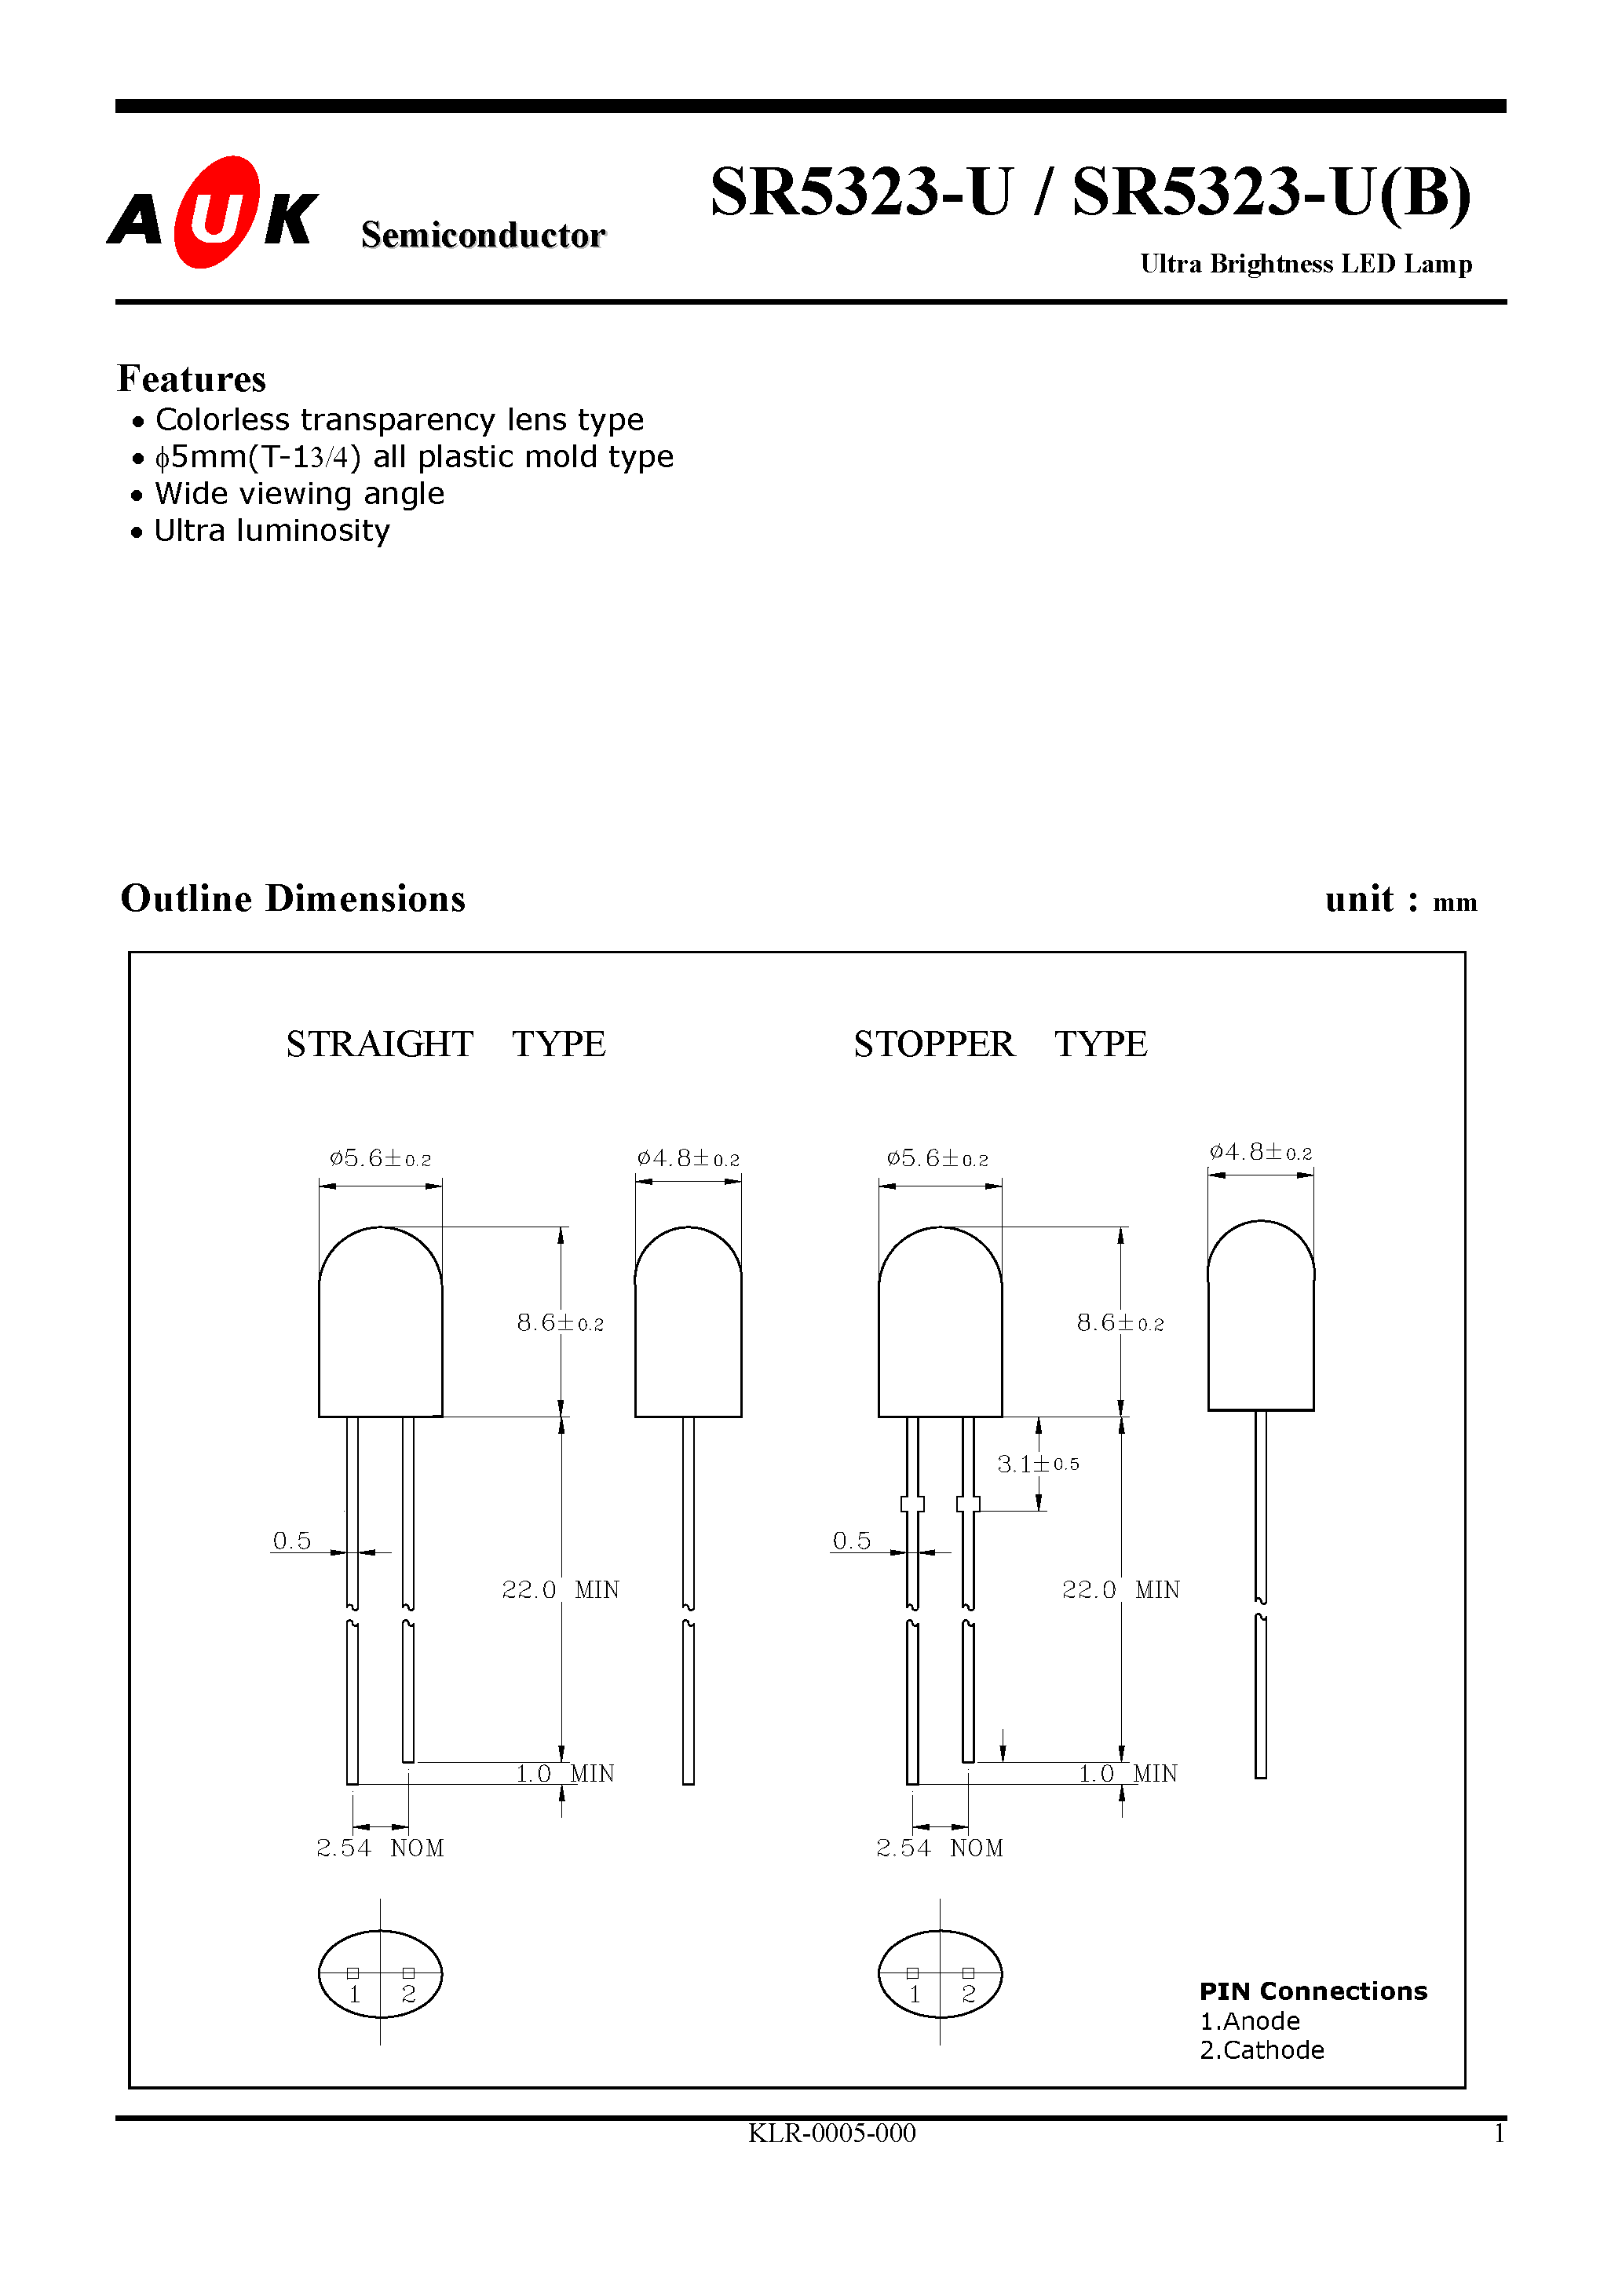 Datasheet SR5323-U(B) - Ultra Brightness LED Lamp page 1